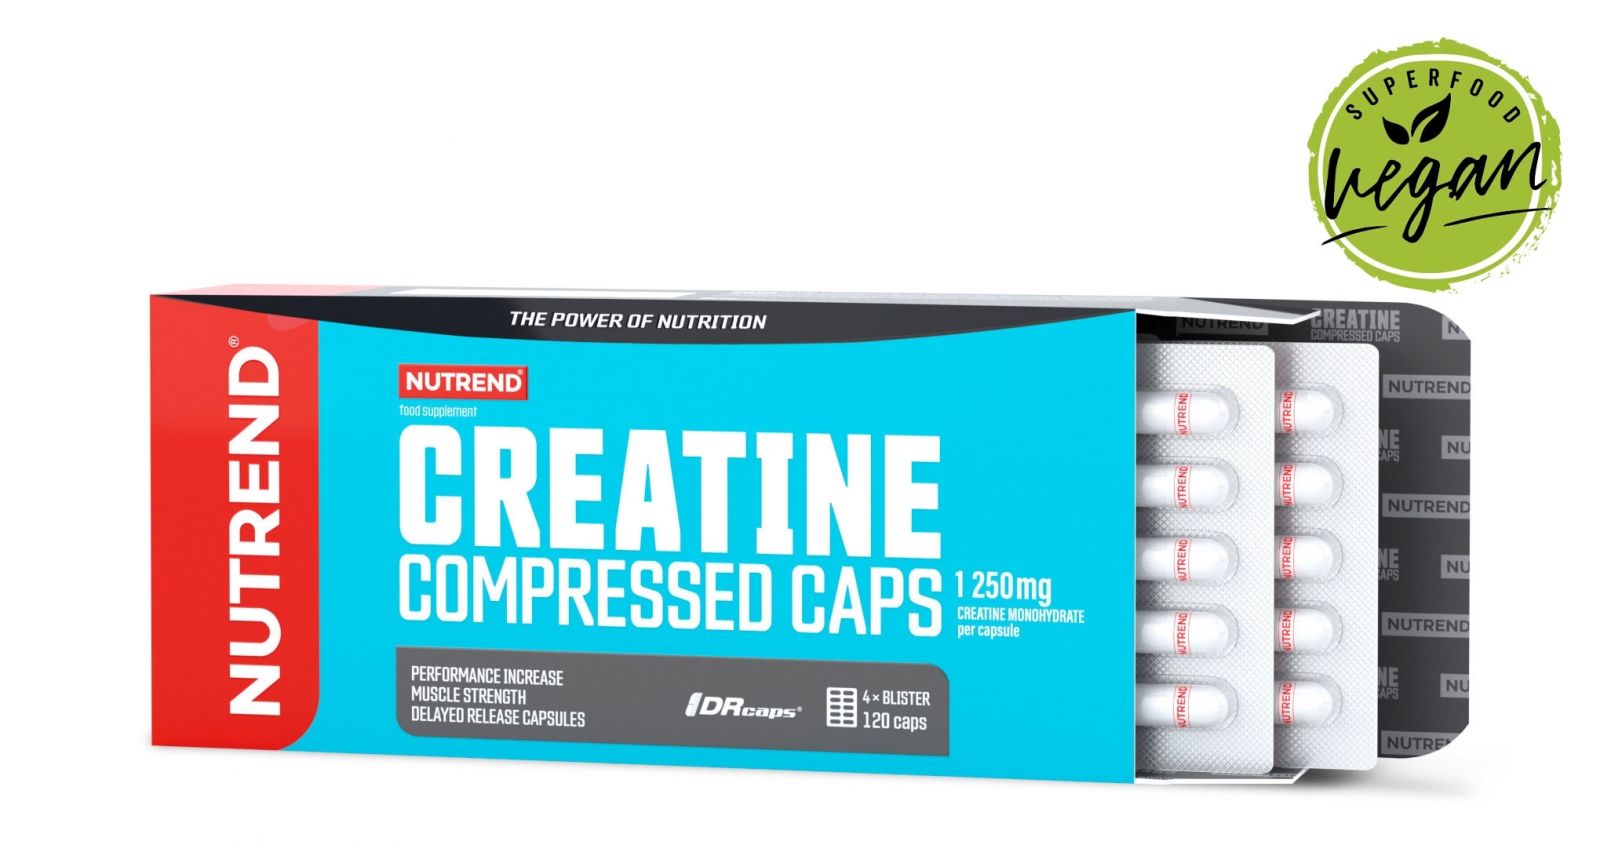 CREATINE COMPRESSED CAPS, obsahuje 120 kapslí NUTREND